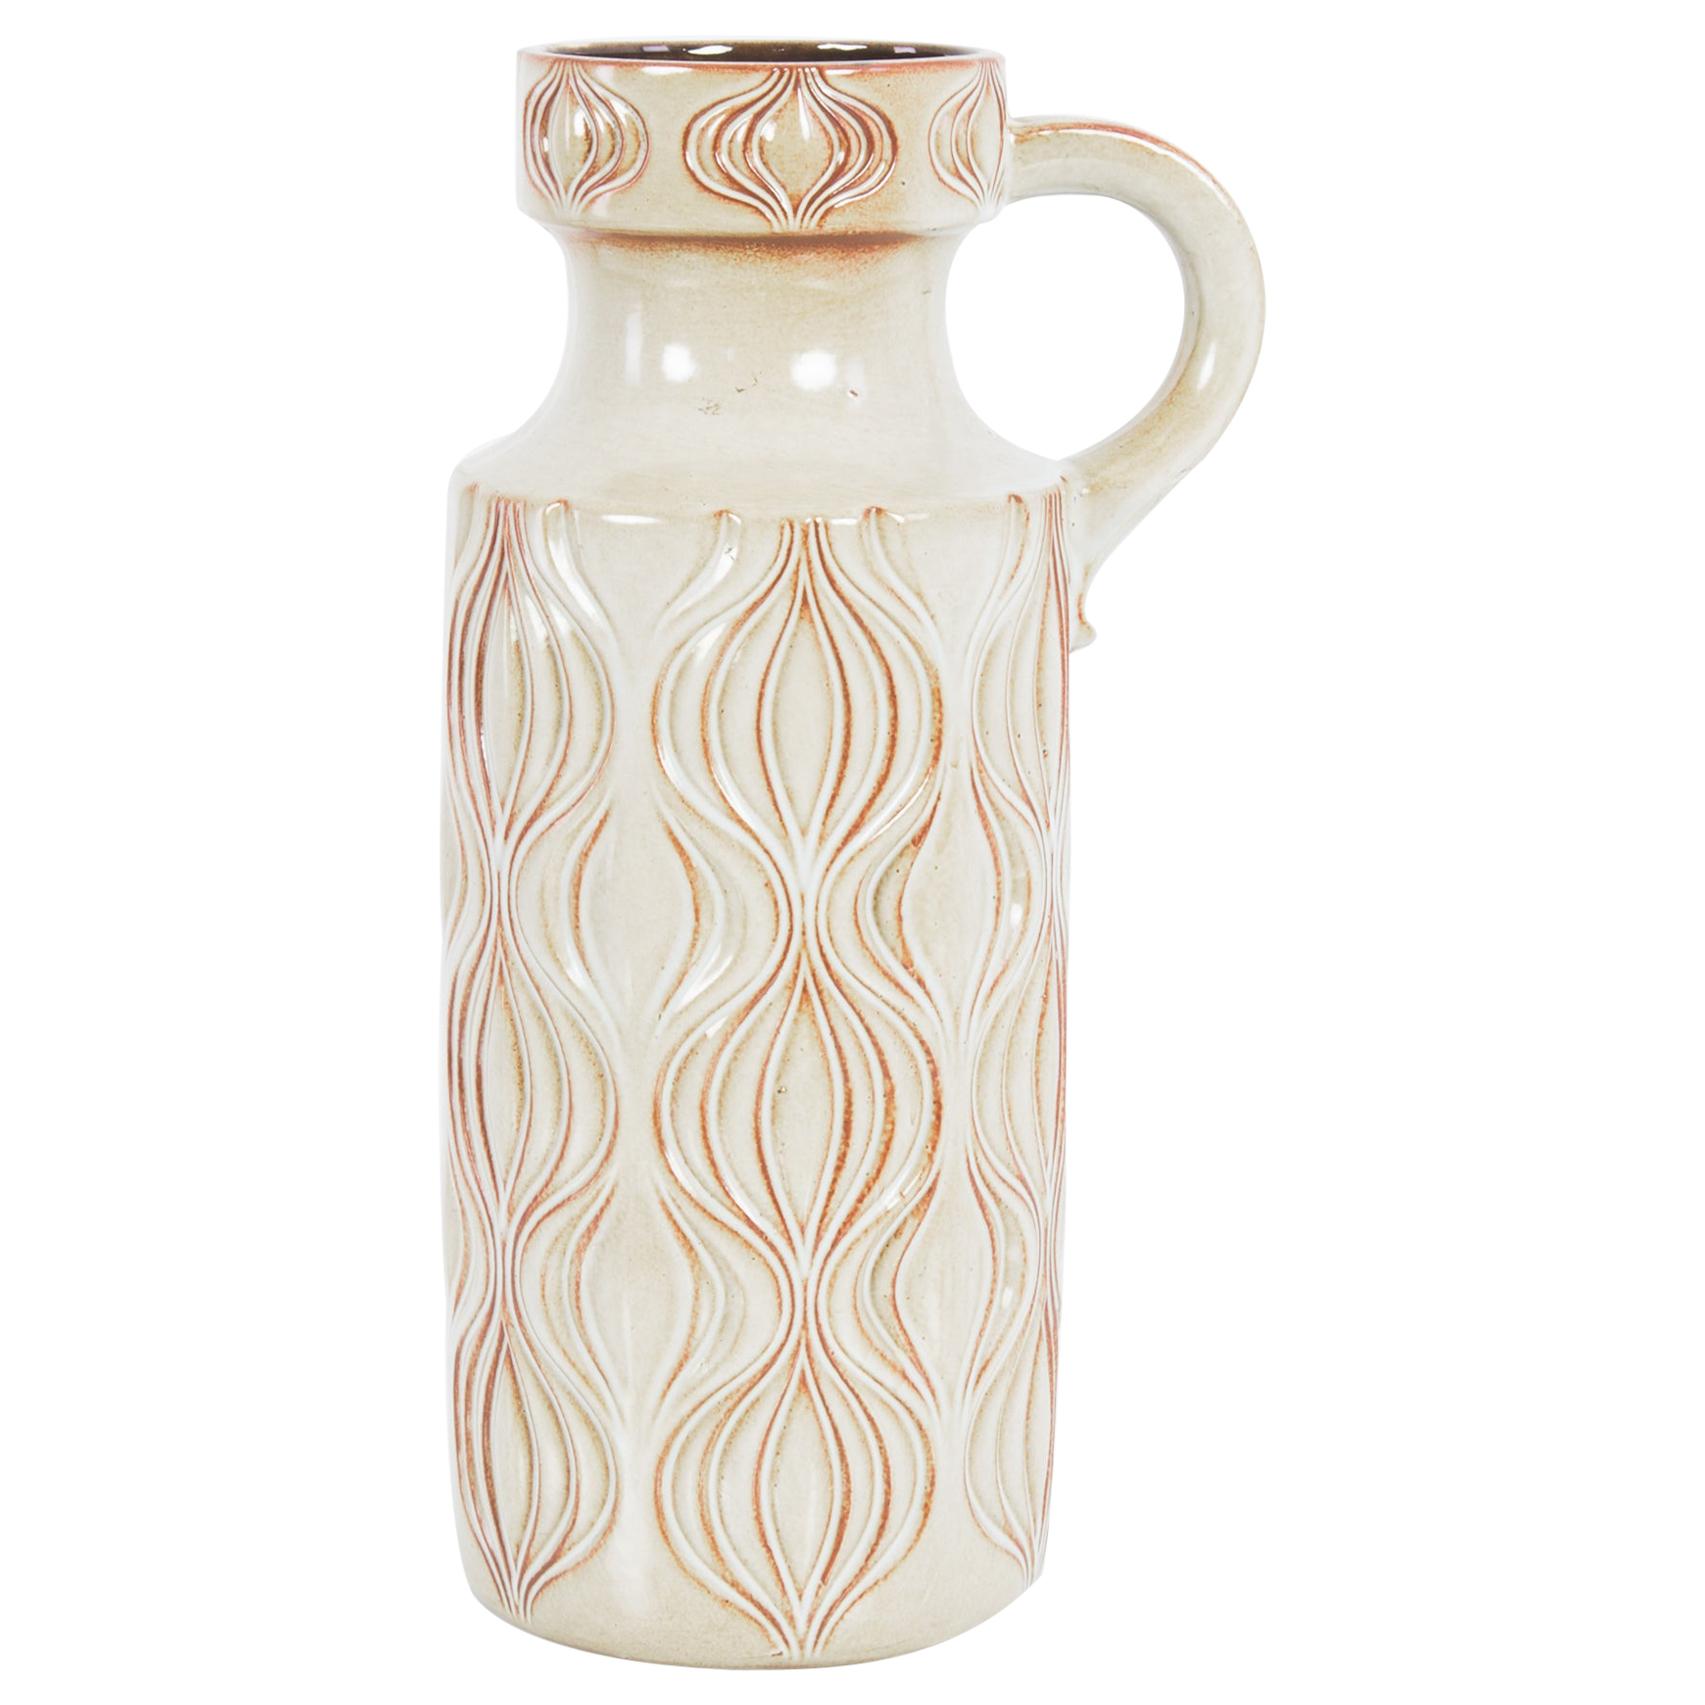 1960s German Ceramic Vase with Undulating Pattern